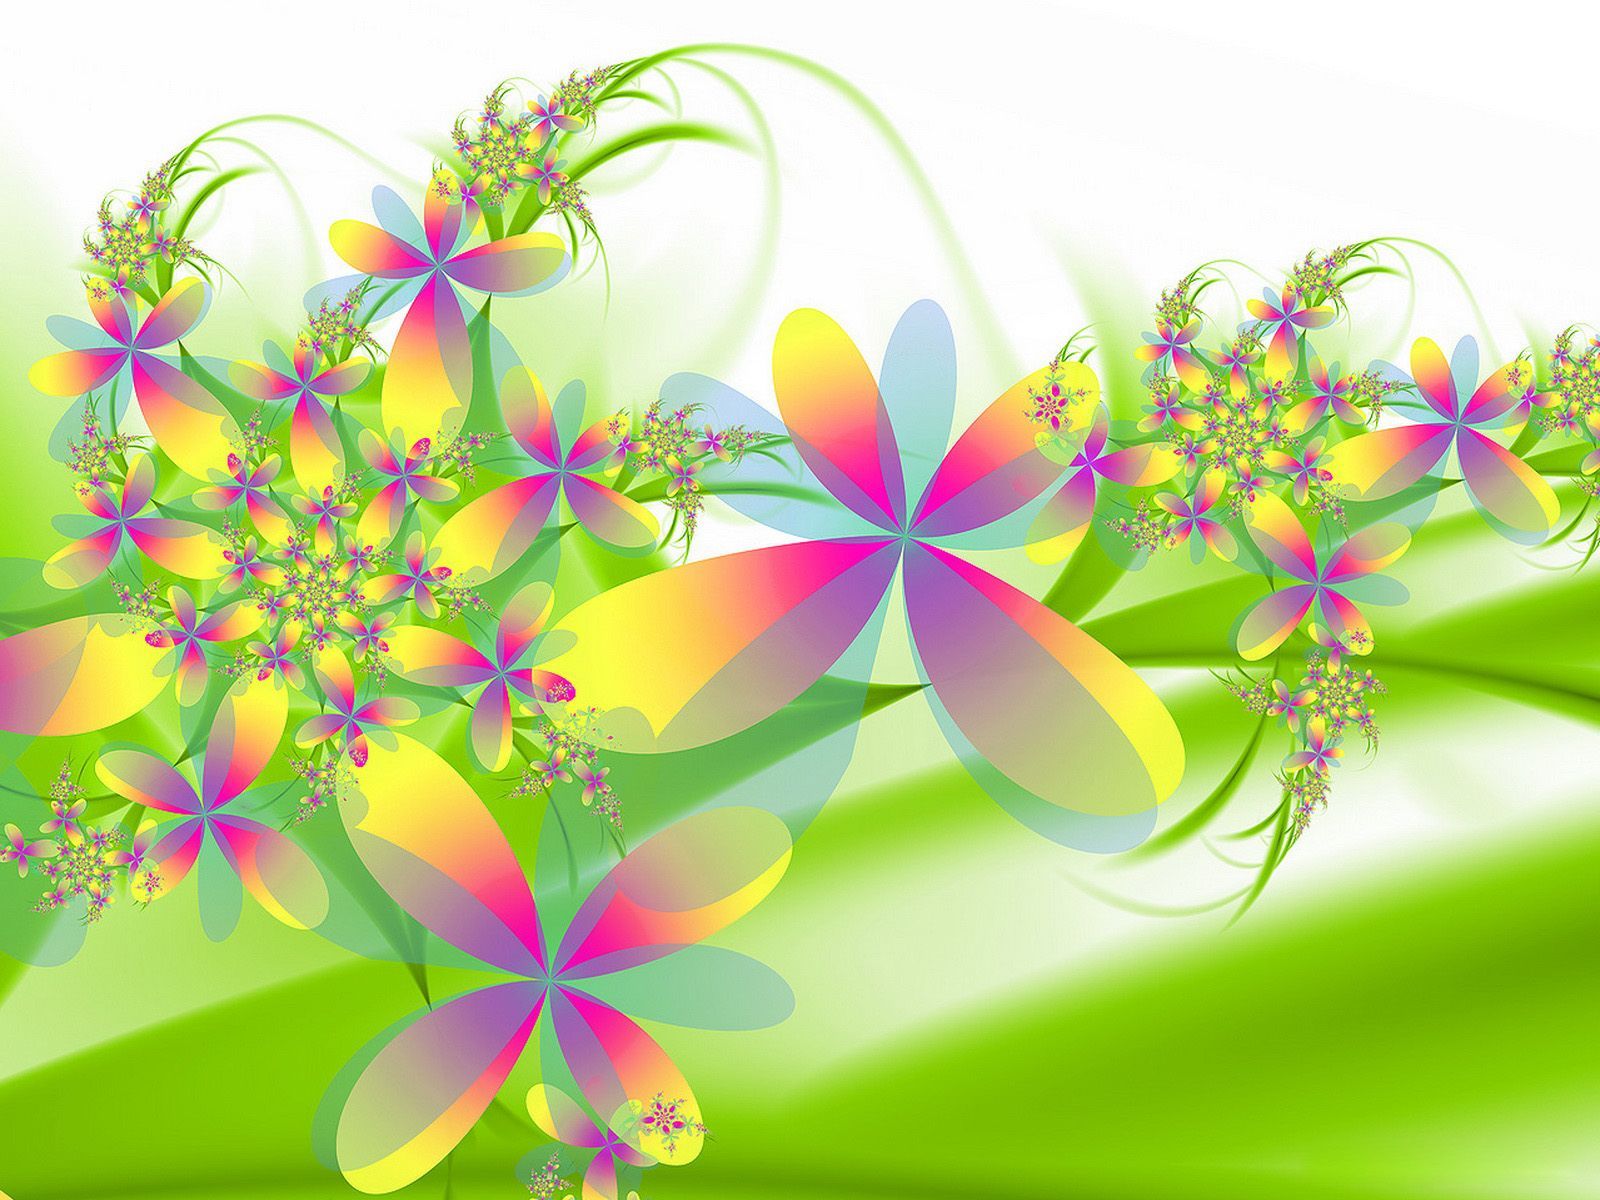 Flowers 3D Background Wallpaper. Free Desk Wallpaper. Flower background image, Flower background wallpaper, Flower wallpaper